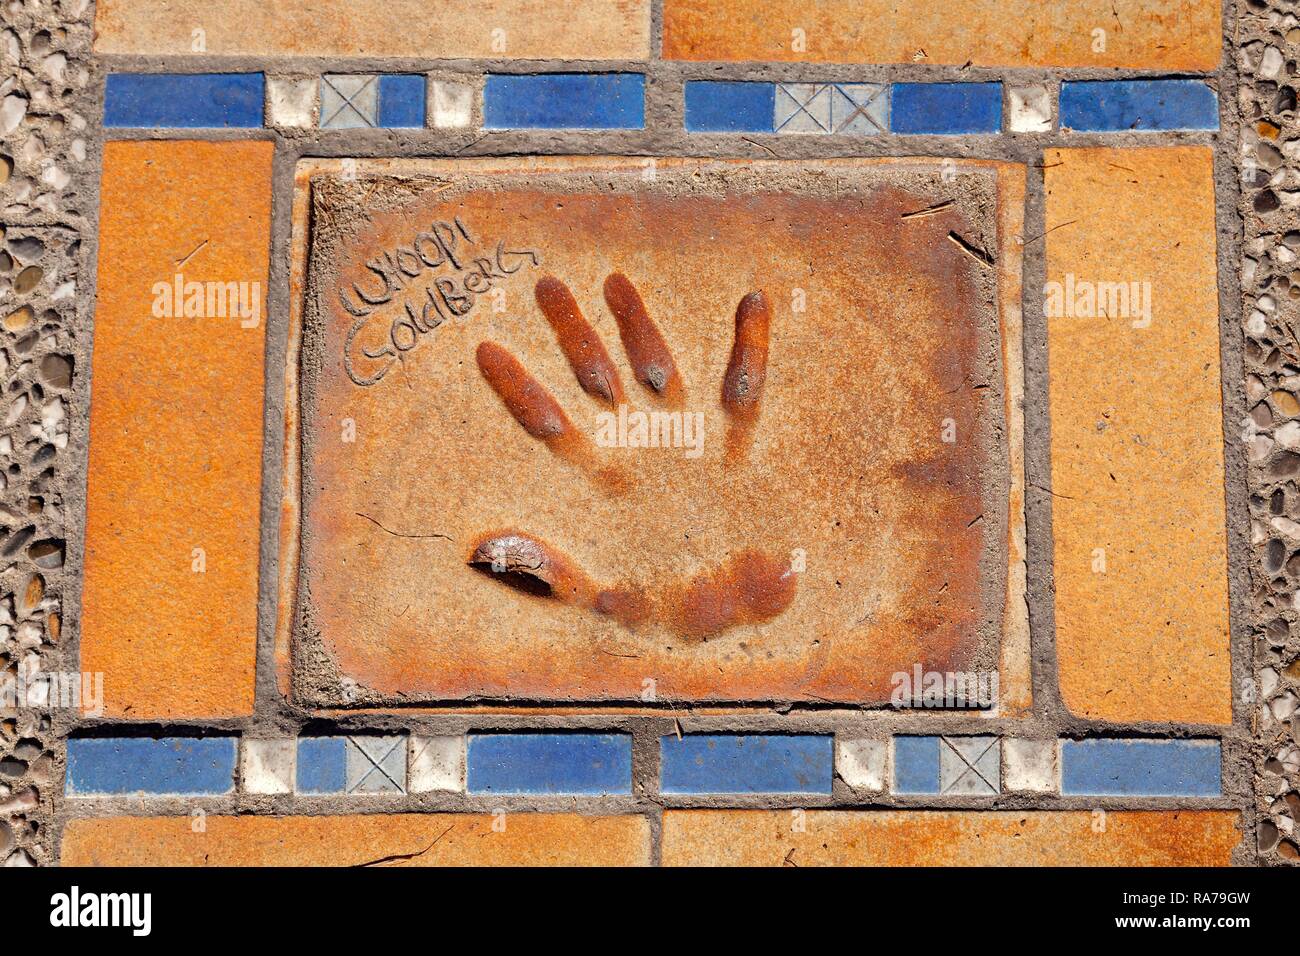 Handprint von Whoopi Goldberg, Allée des Stars, Cannes, Cote d'Azur, Frankreich Stockfoto